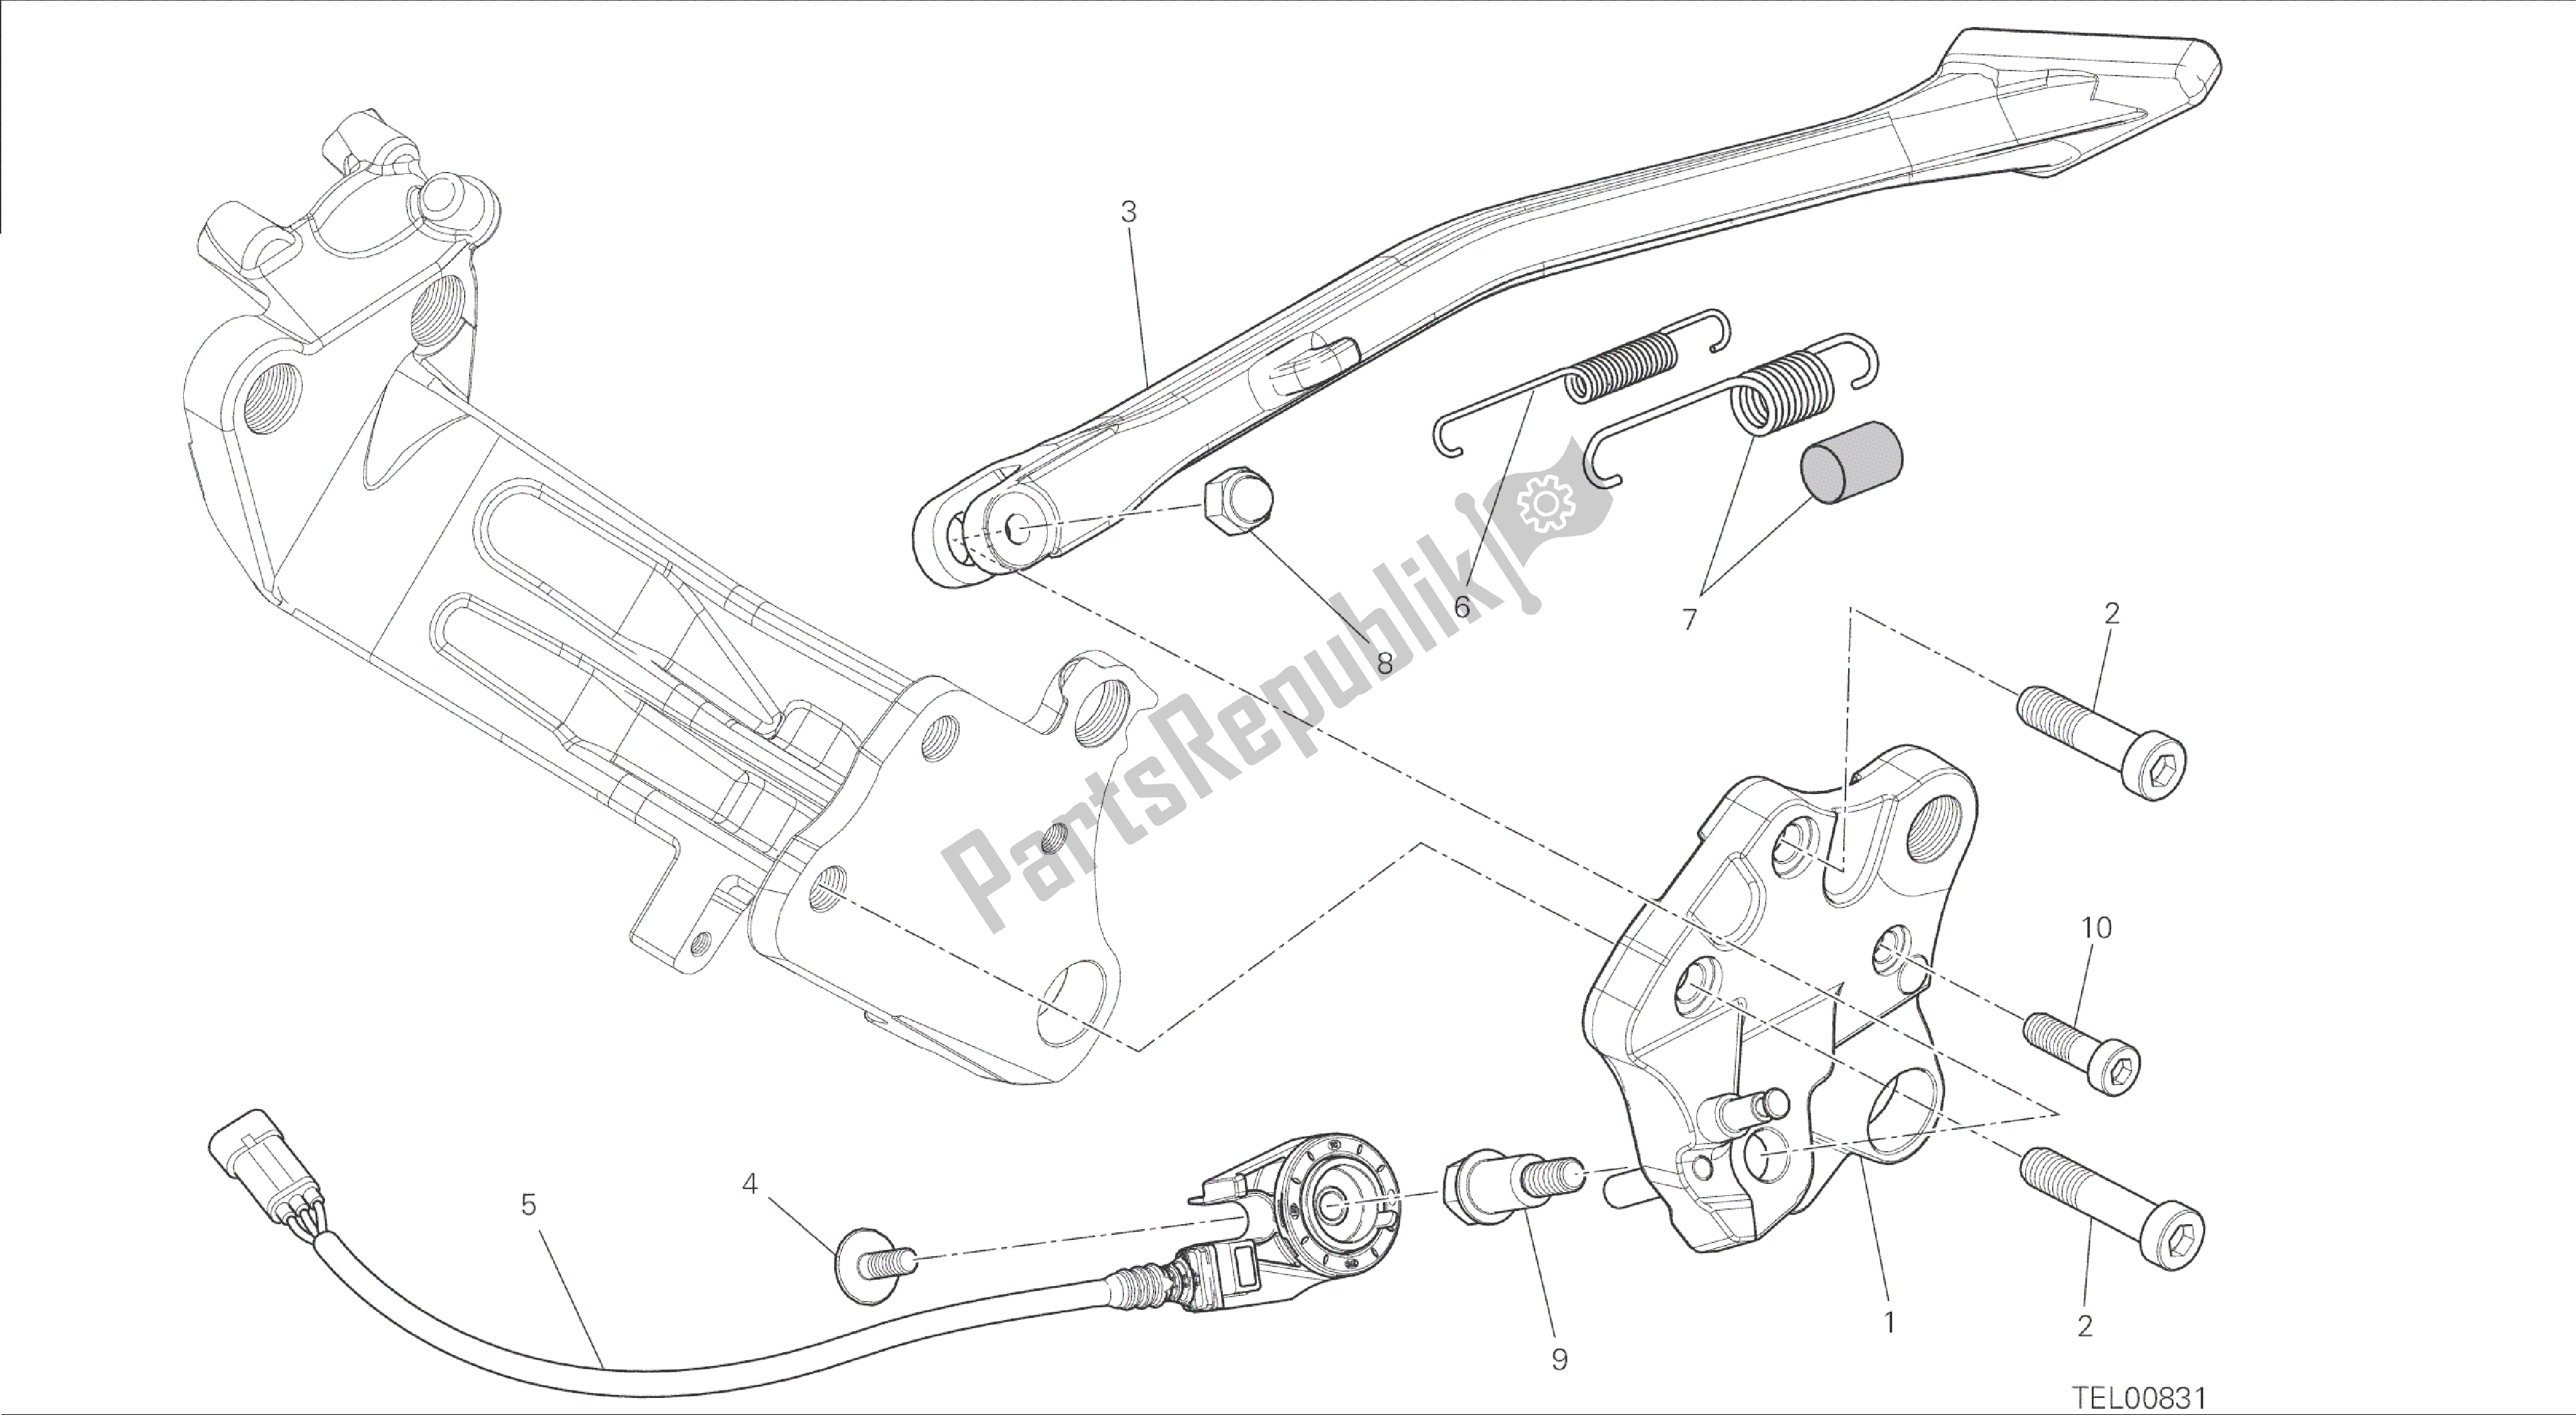 Todas las partes para Dibujo 22a - Bastidor De Grupo De Soporte Lateral [mod: Dvl] de Ducati Diavel 1200 2015